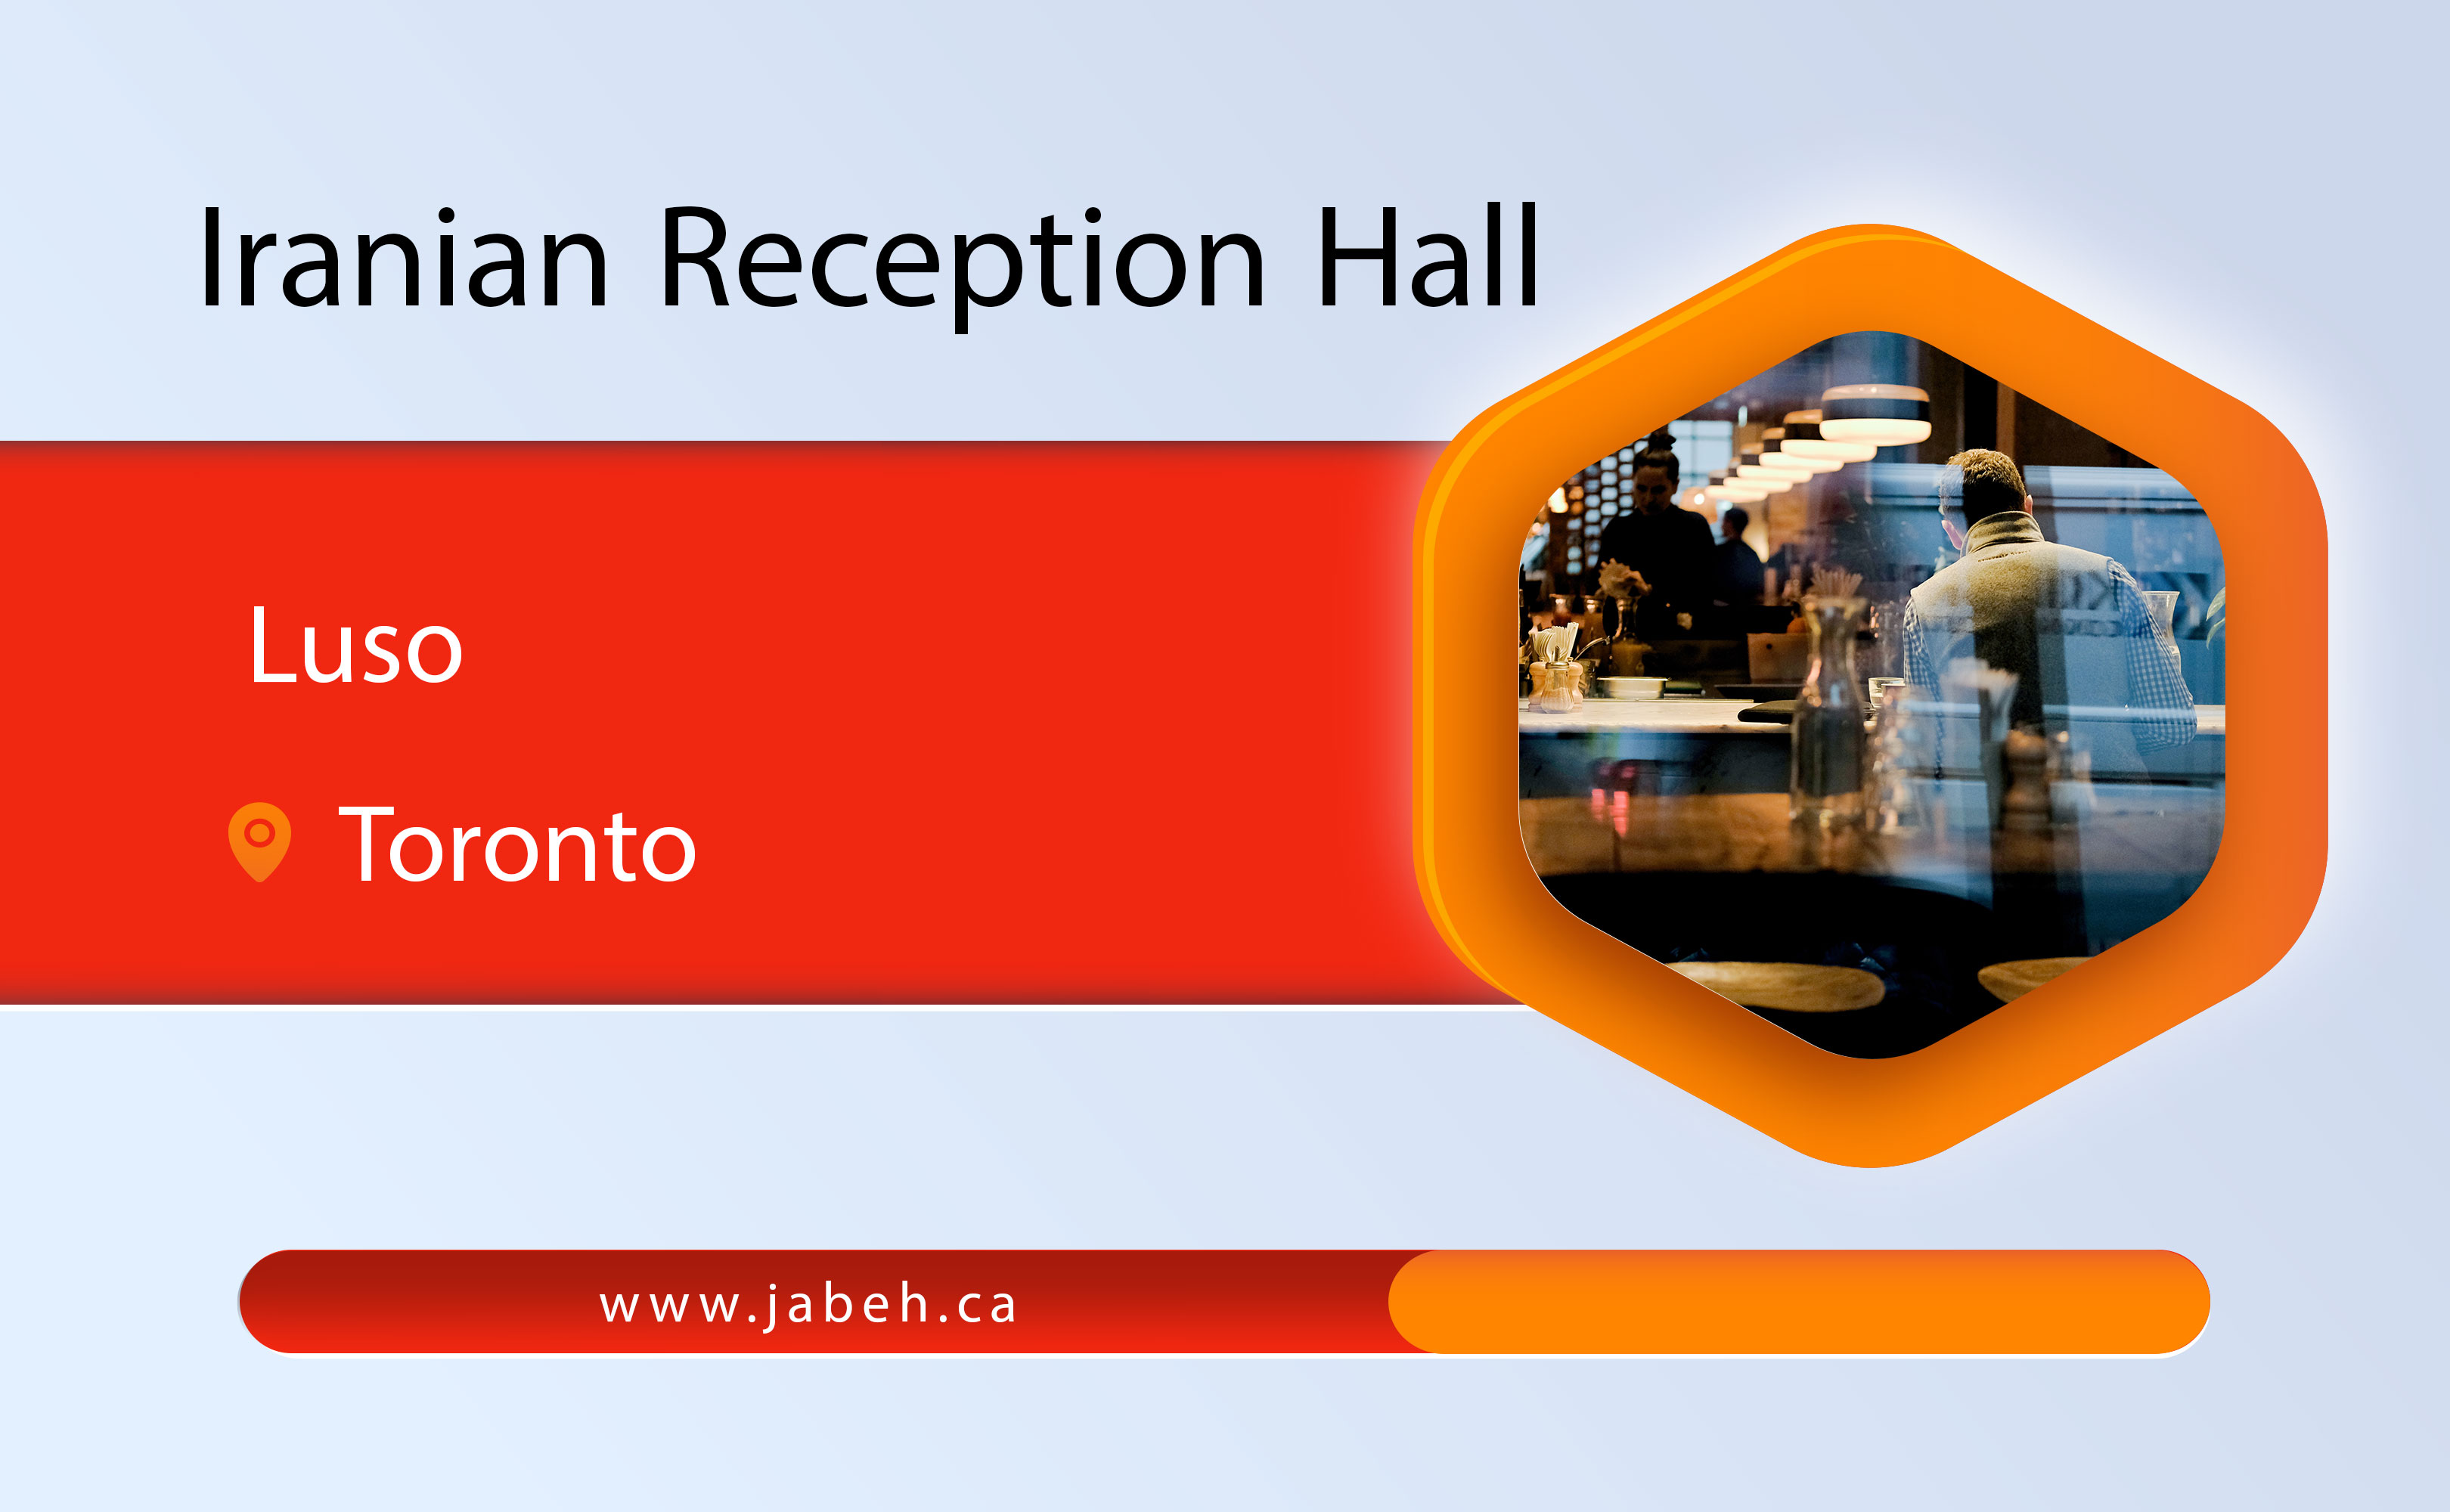 Luso Iranian Reception Hall in Toronto